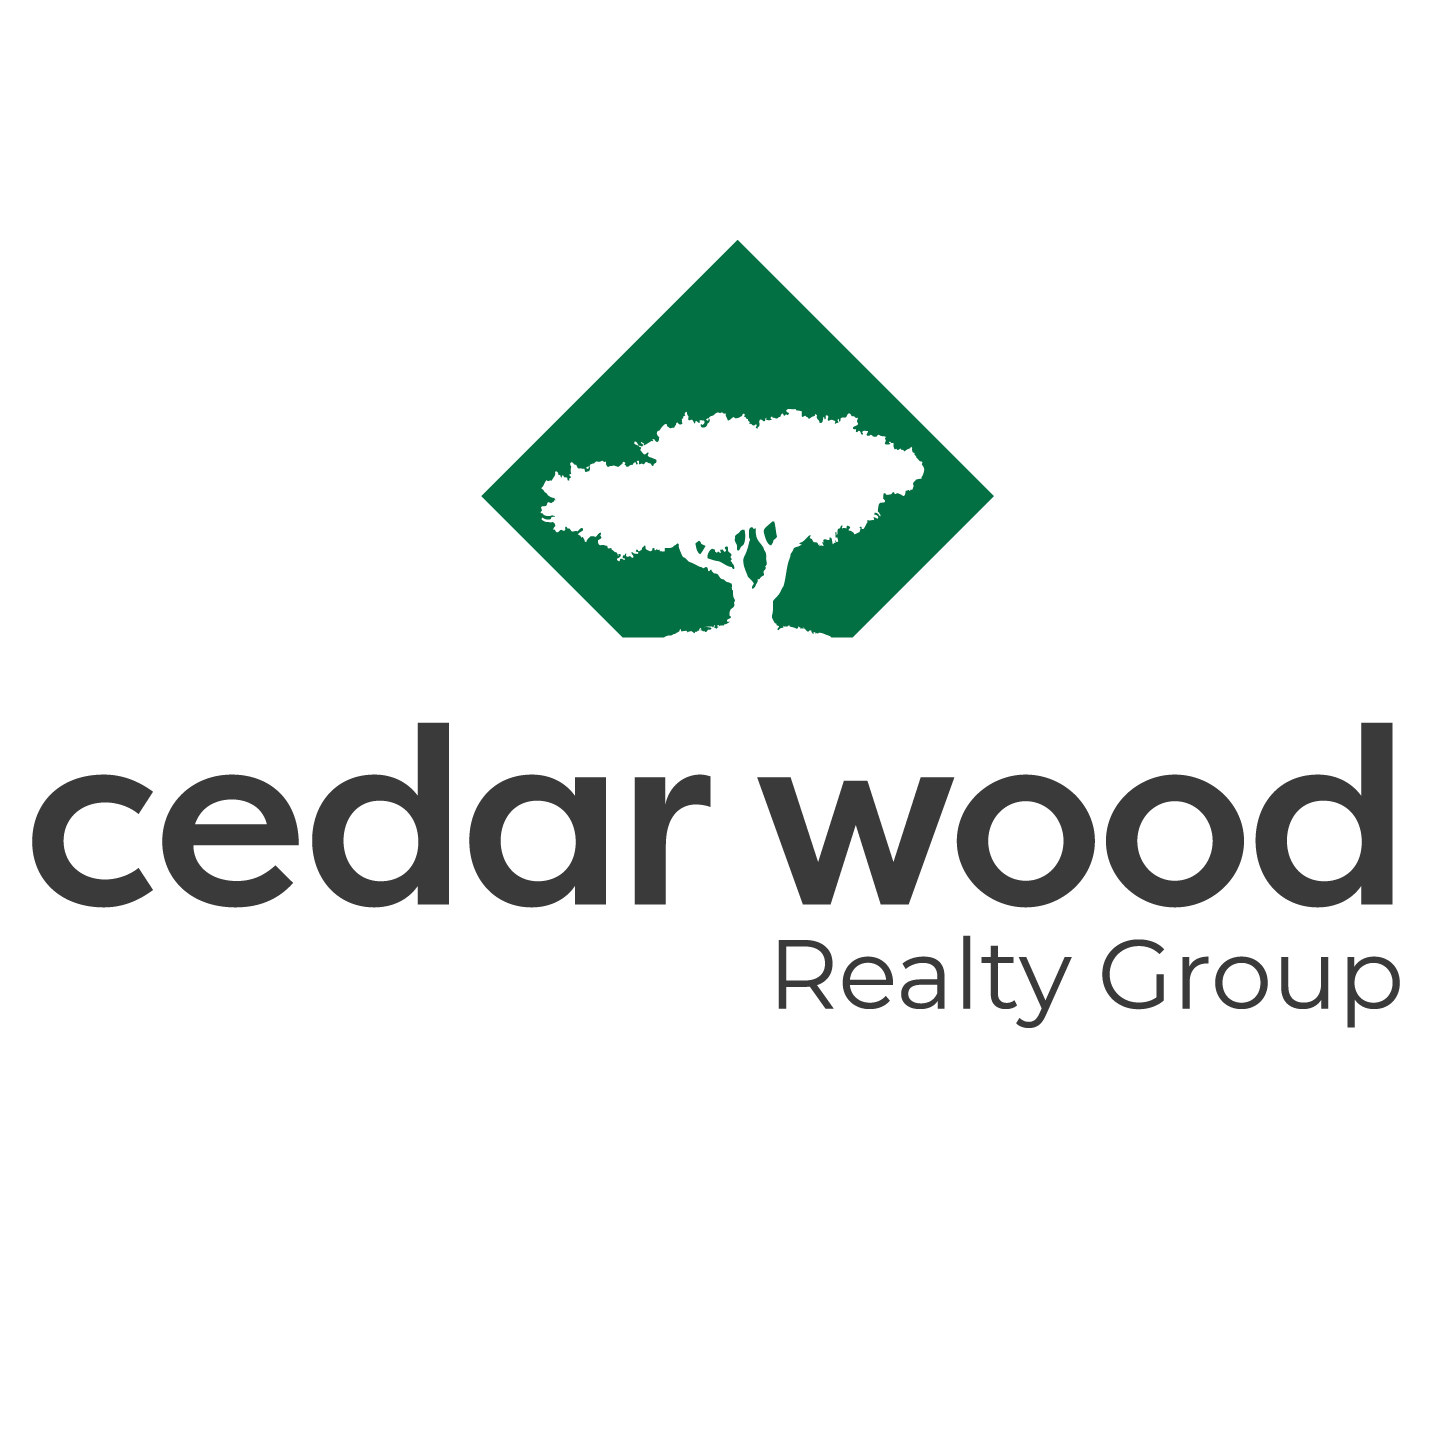 Cedar Wood Realty Group in Worcester, MA